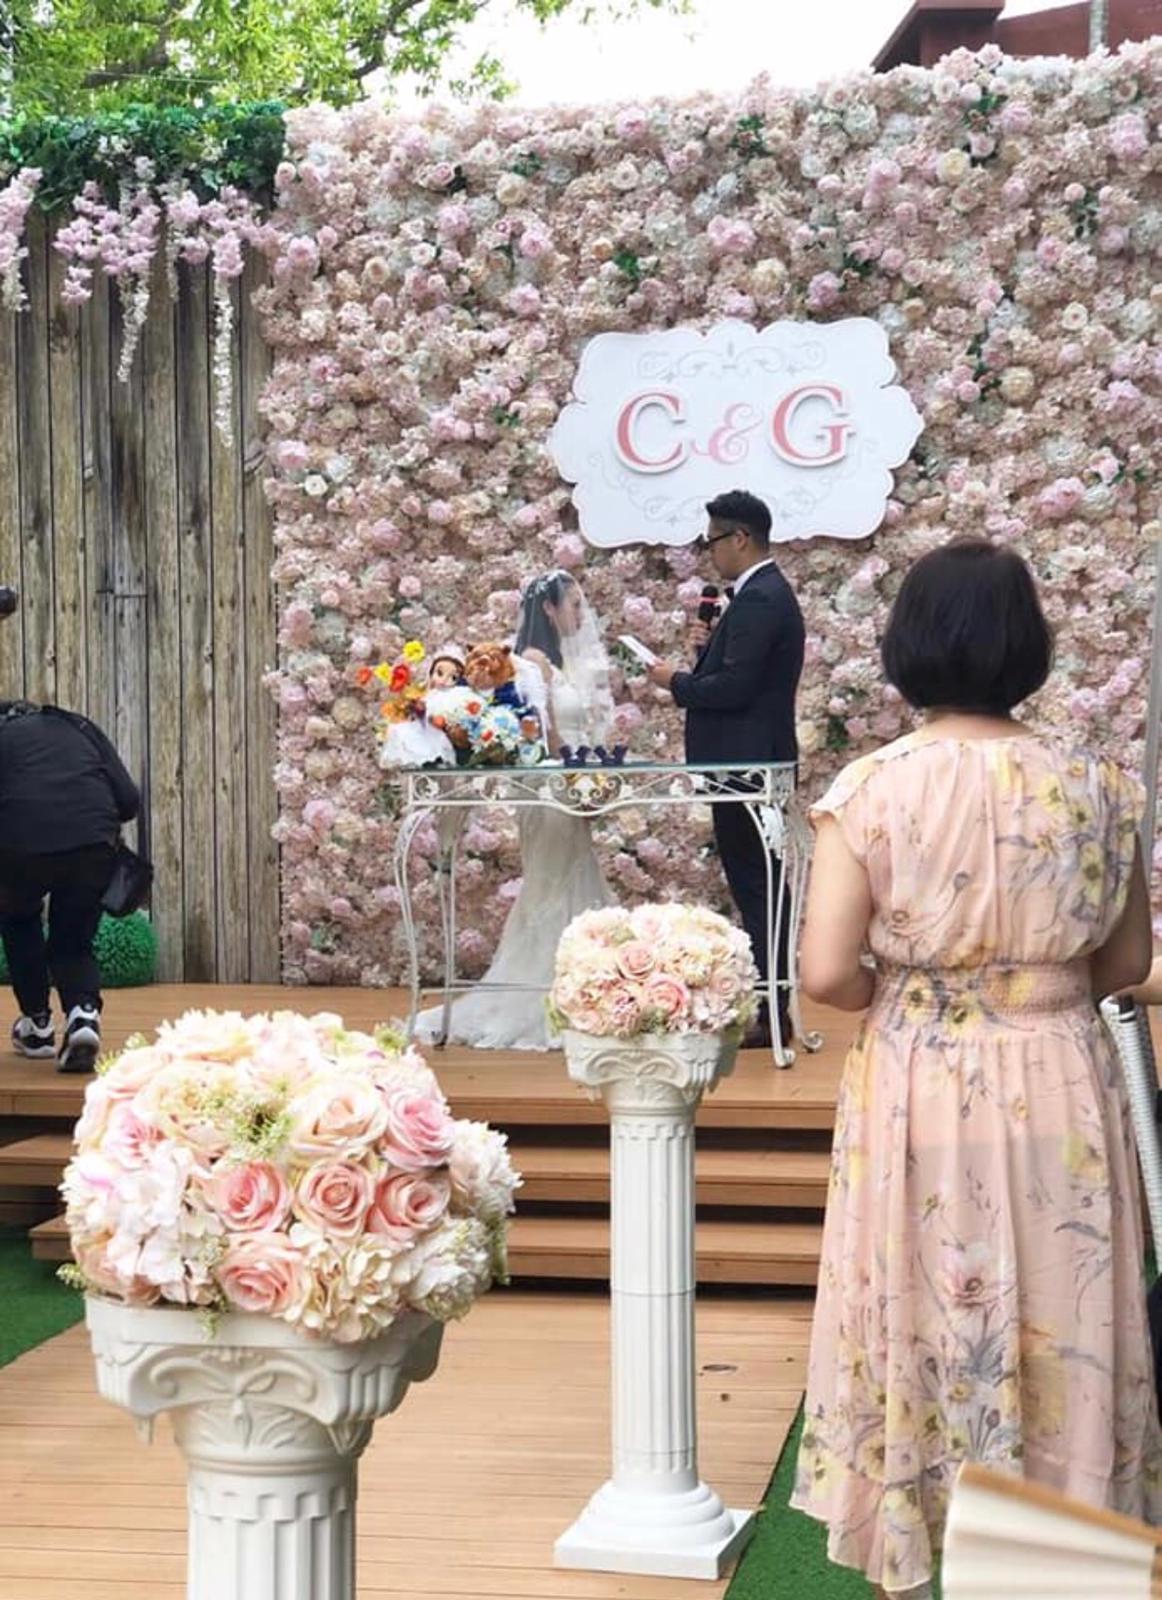 Queeny Ng婚禮統籌師工作紀錄: C&G - 西式婚禮統籌